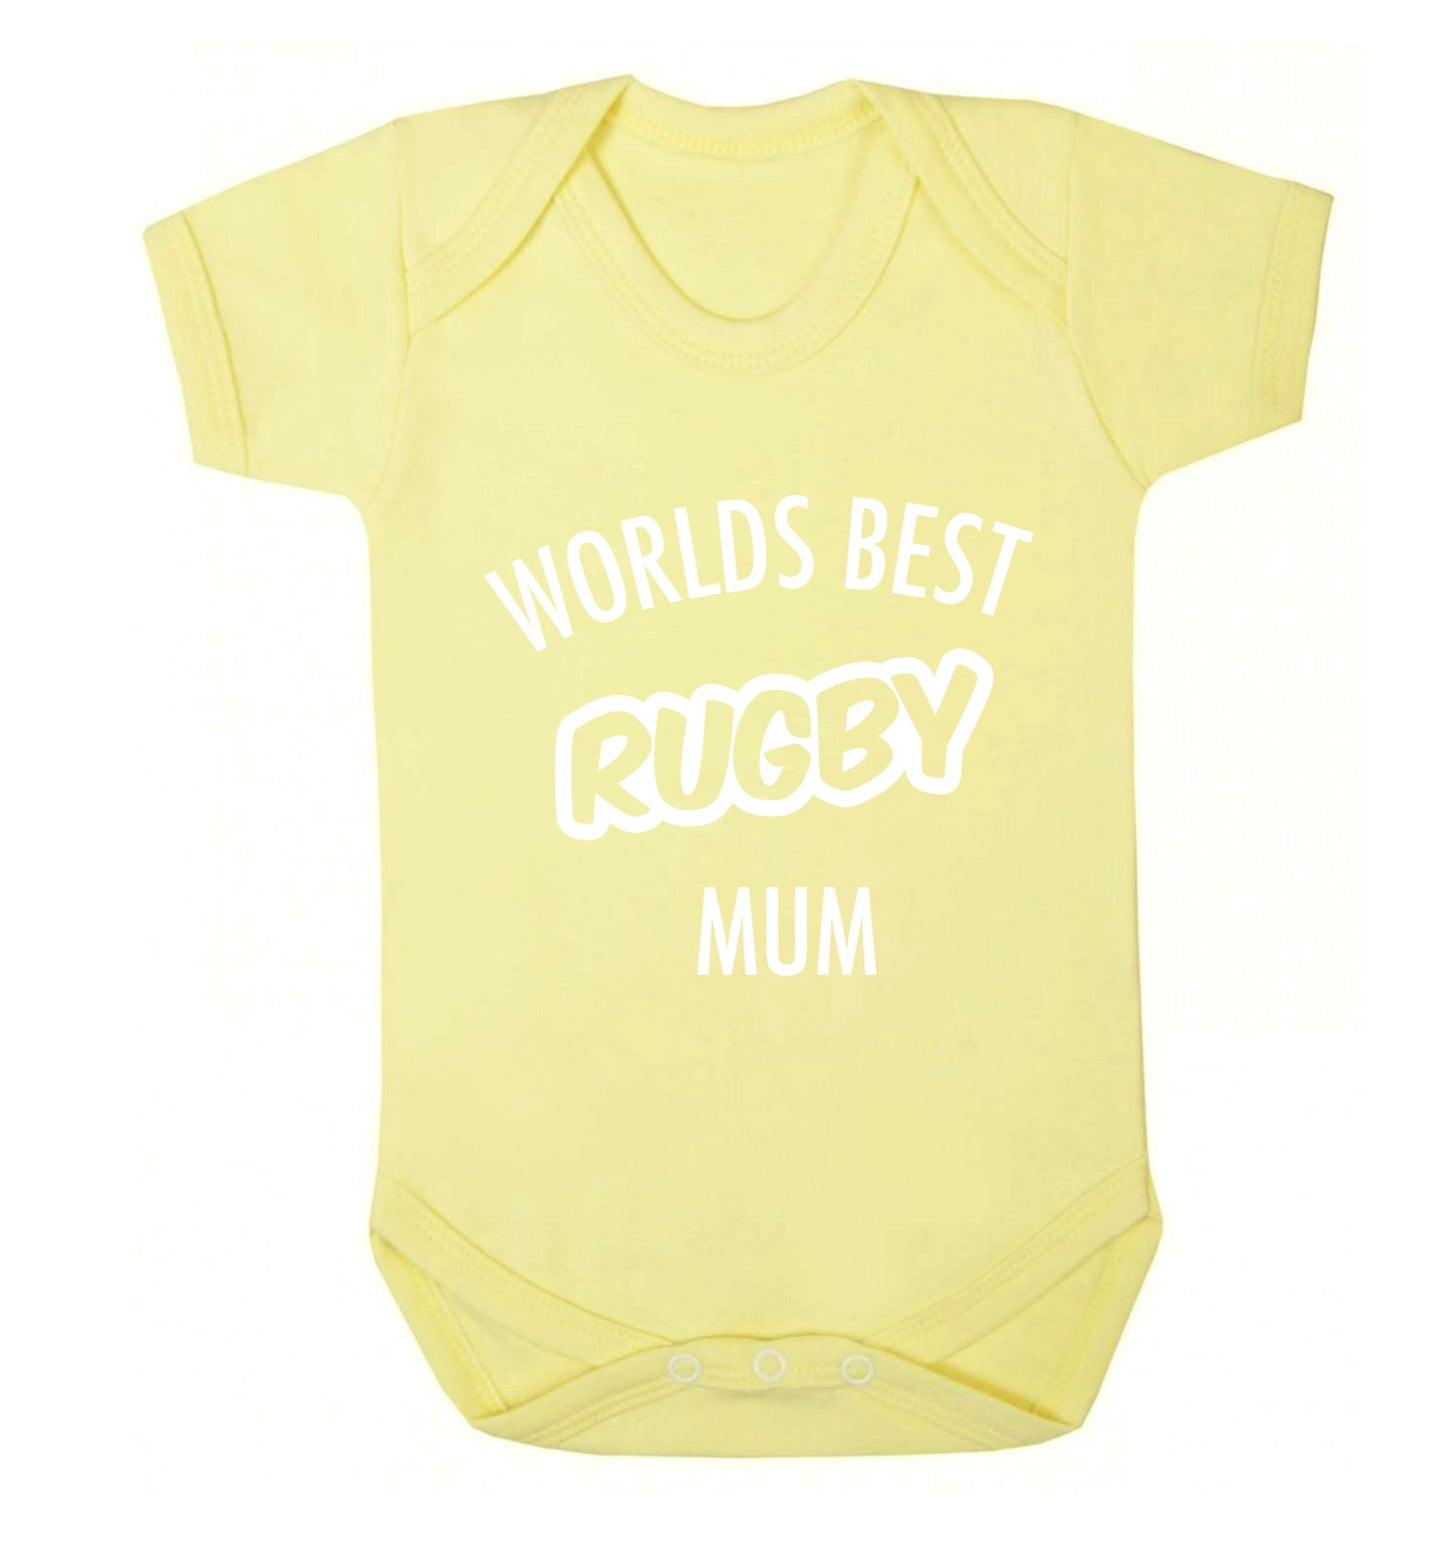 Worlds best rugby mum Baby Vest pale yellow 18-24 months